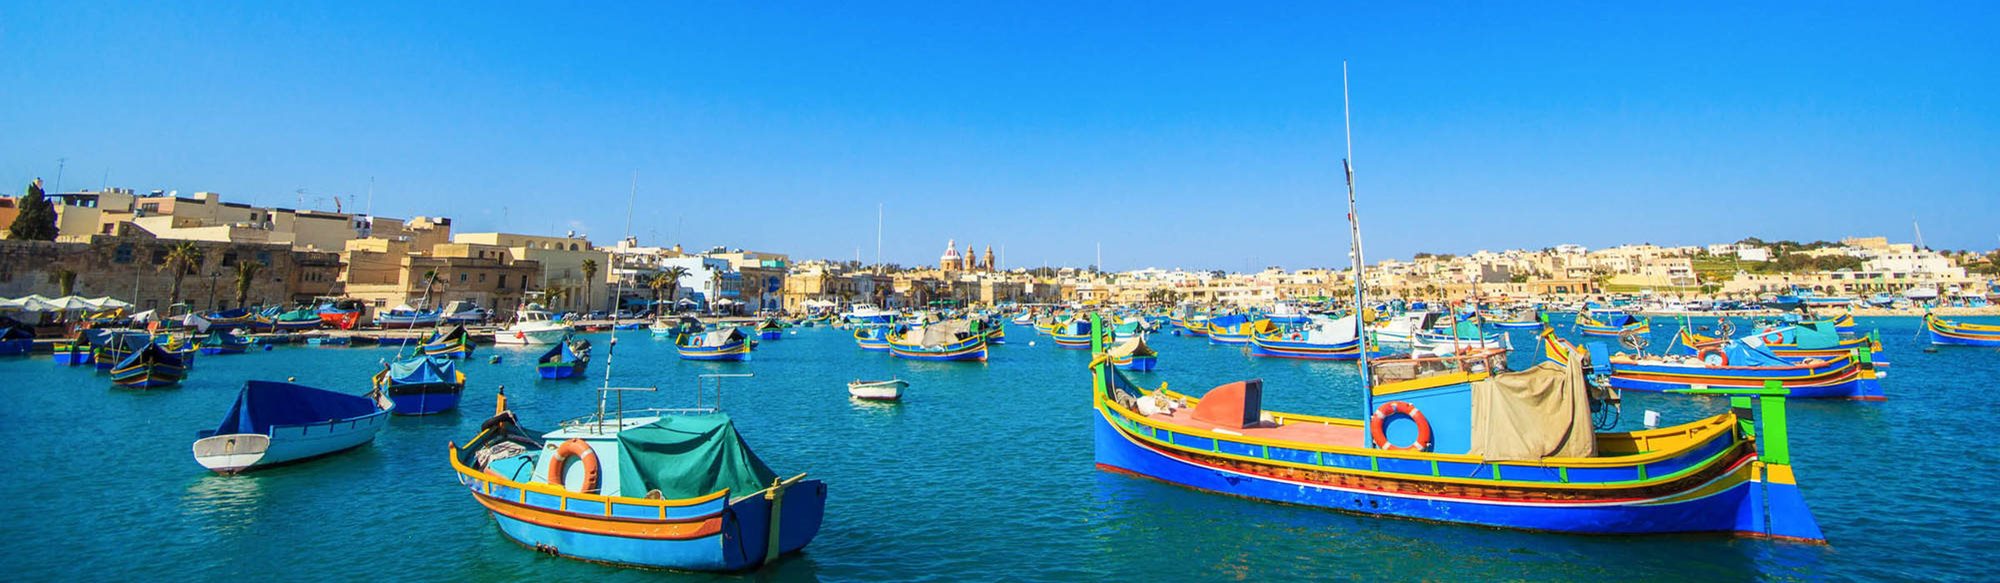 huvudstad malta